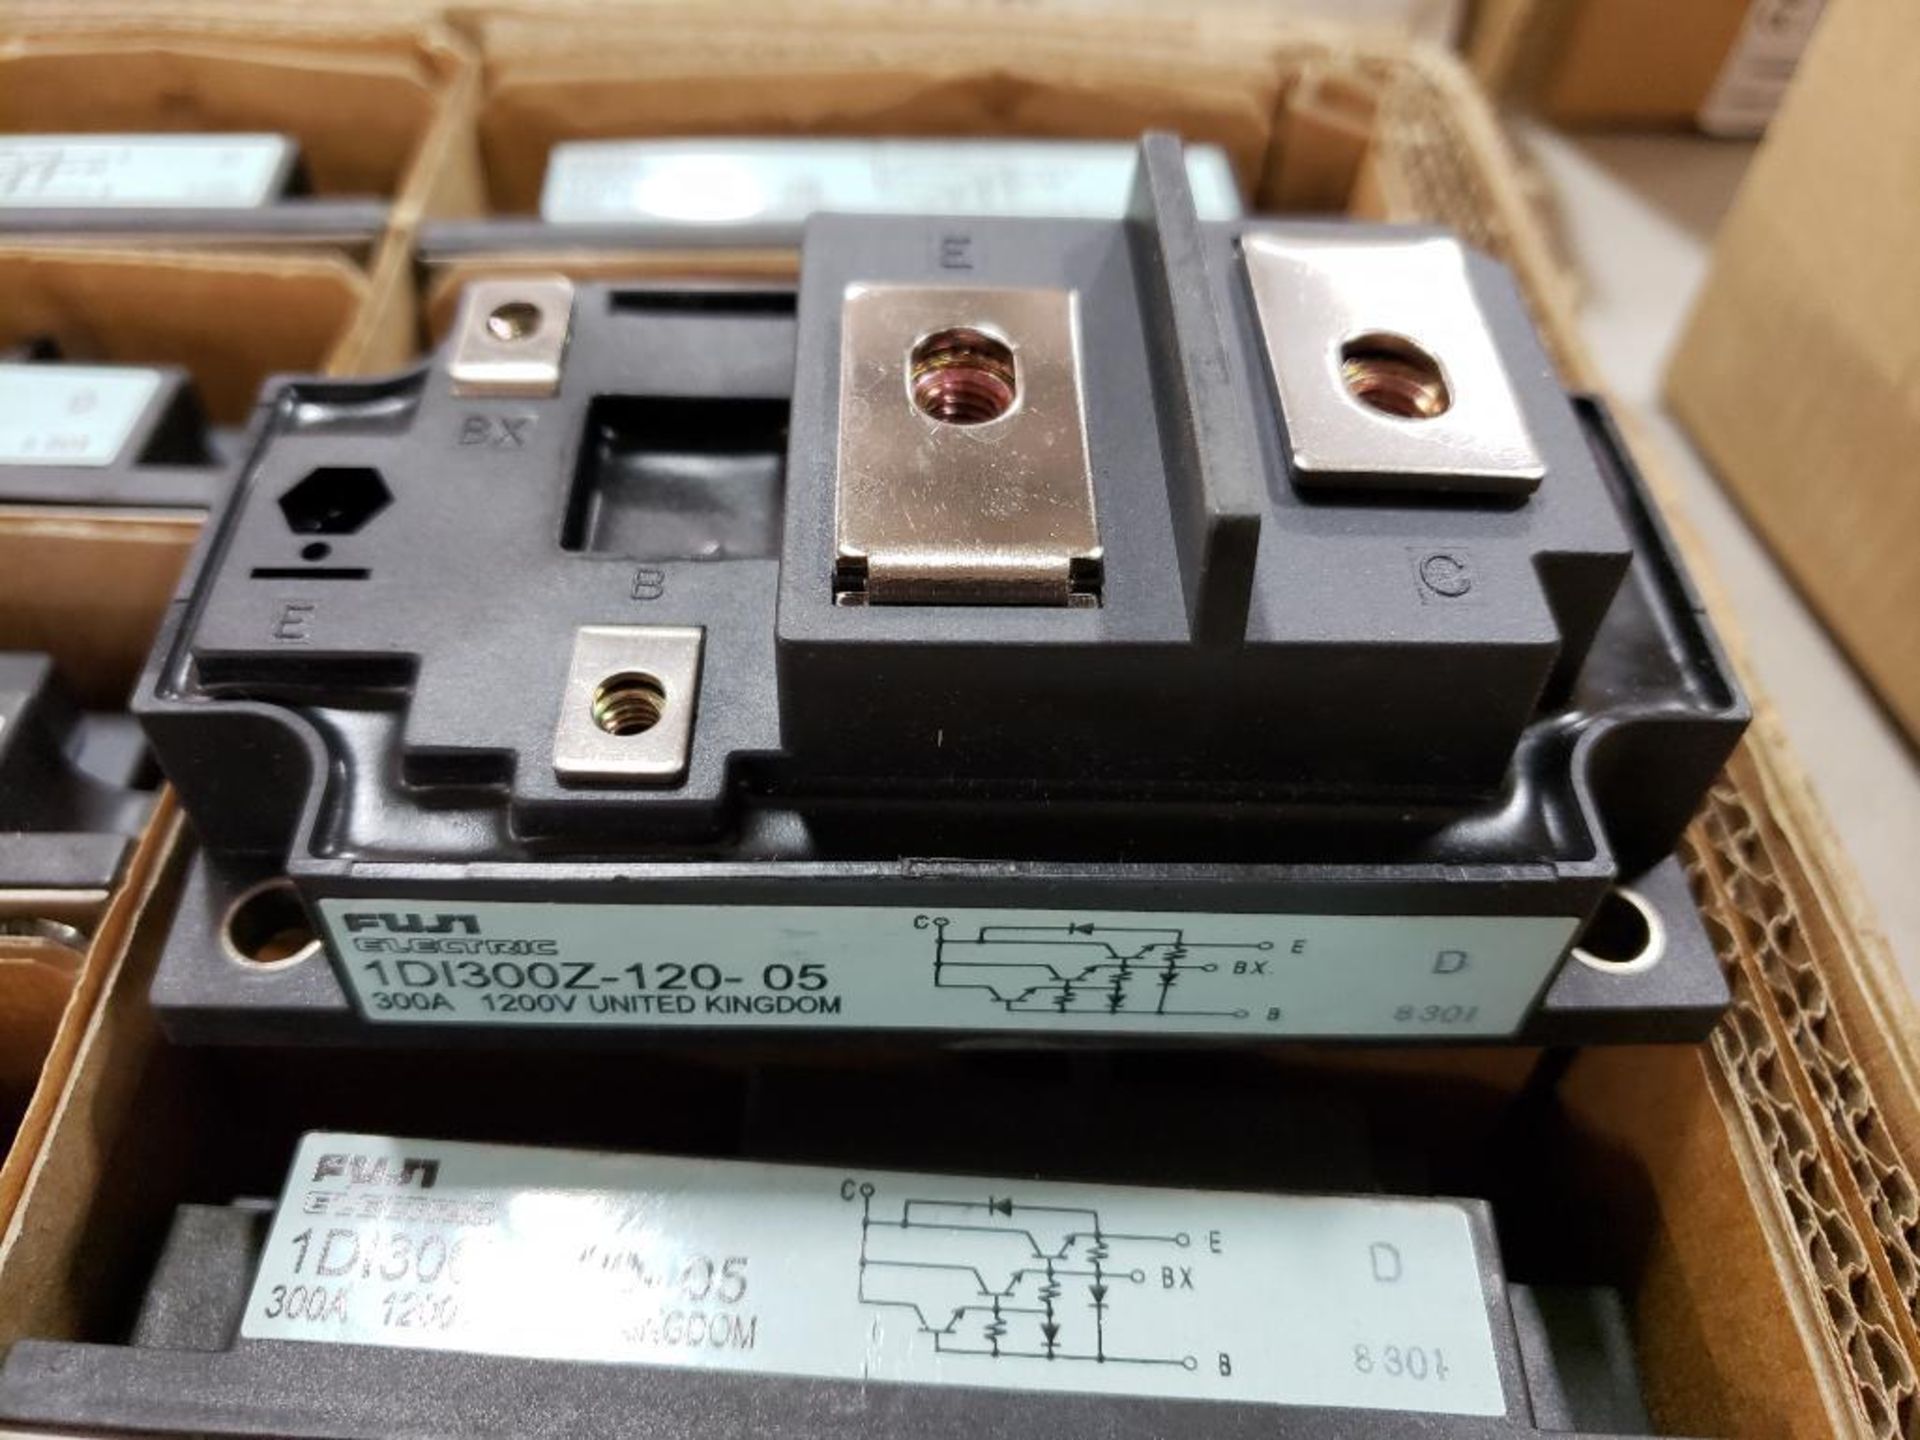 Qty 10 - Fuji Electric transistor module. Model 1DI300Z-120-05. New in bulk box. - Image 2 of 3